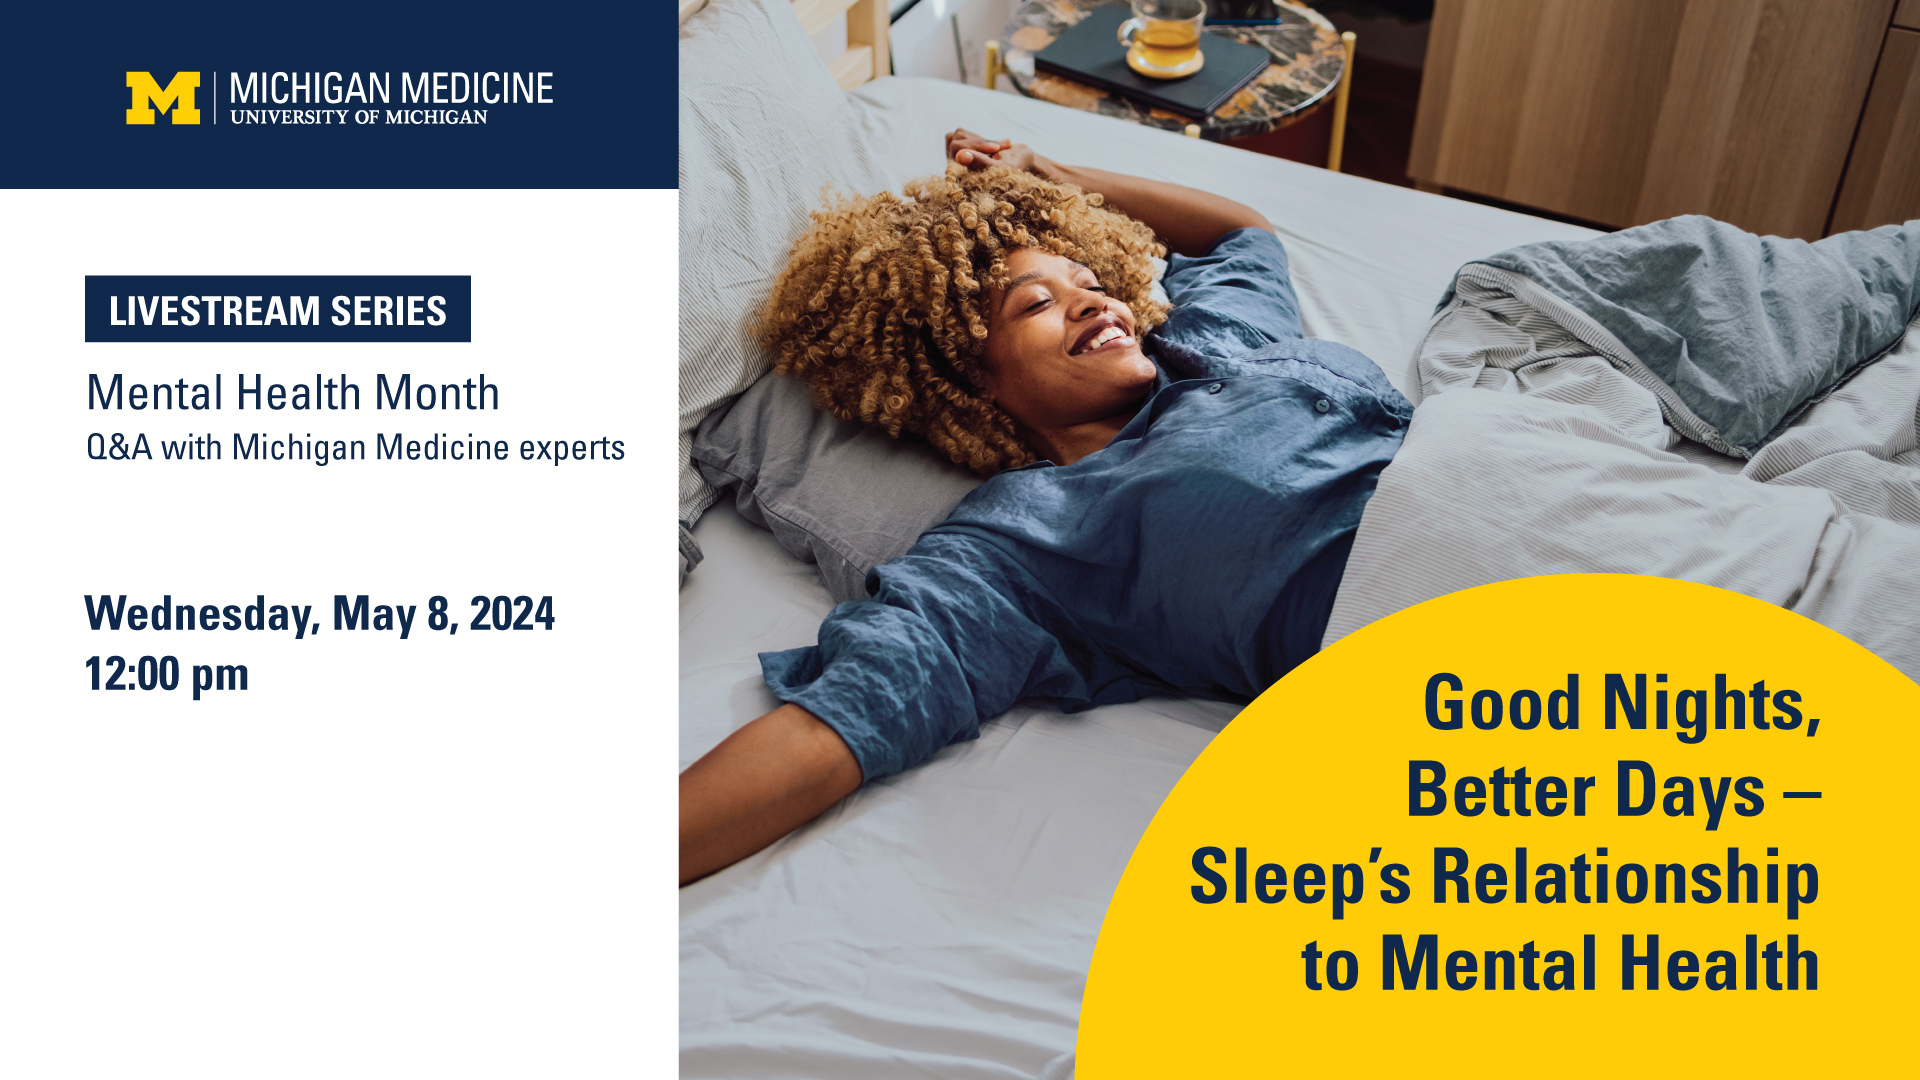 Good Nights, Better Days: Sleep's Relationship to Mental Health